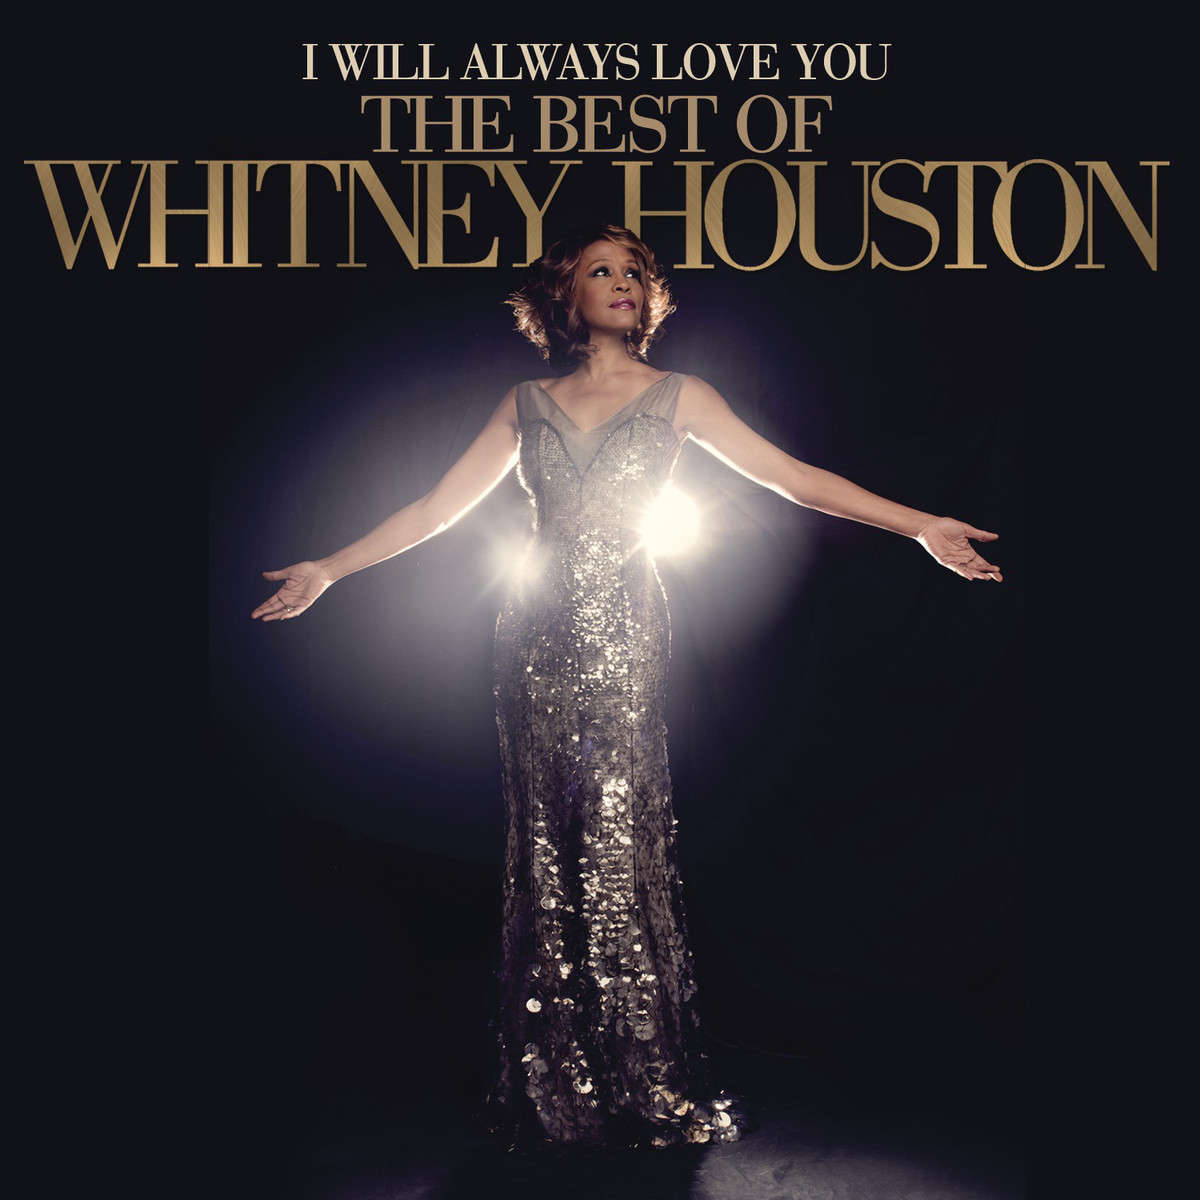 http://4.bp.blogspot.com/-jglpWBeR7bU/UKZylhXxQ3I/AAAAAAAAACA/tbCzDoKSxyM/s1600/Whitney+Houston+%E2%80%9CI+Will+Always+Love+You+%E2%80%93+The+Best+of+Whitney+Houston%E2%80%9D.png